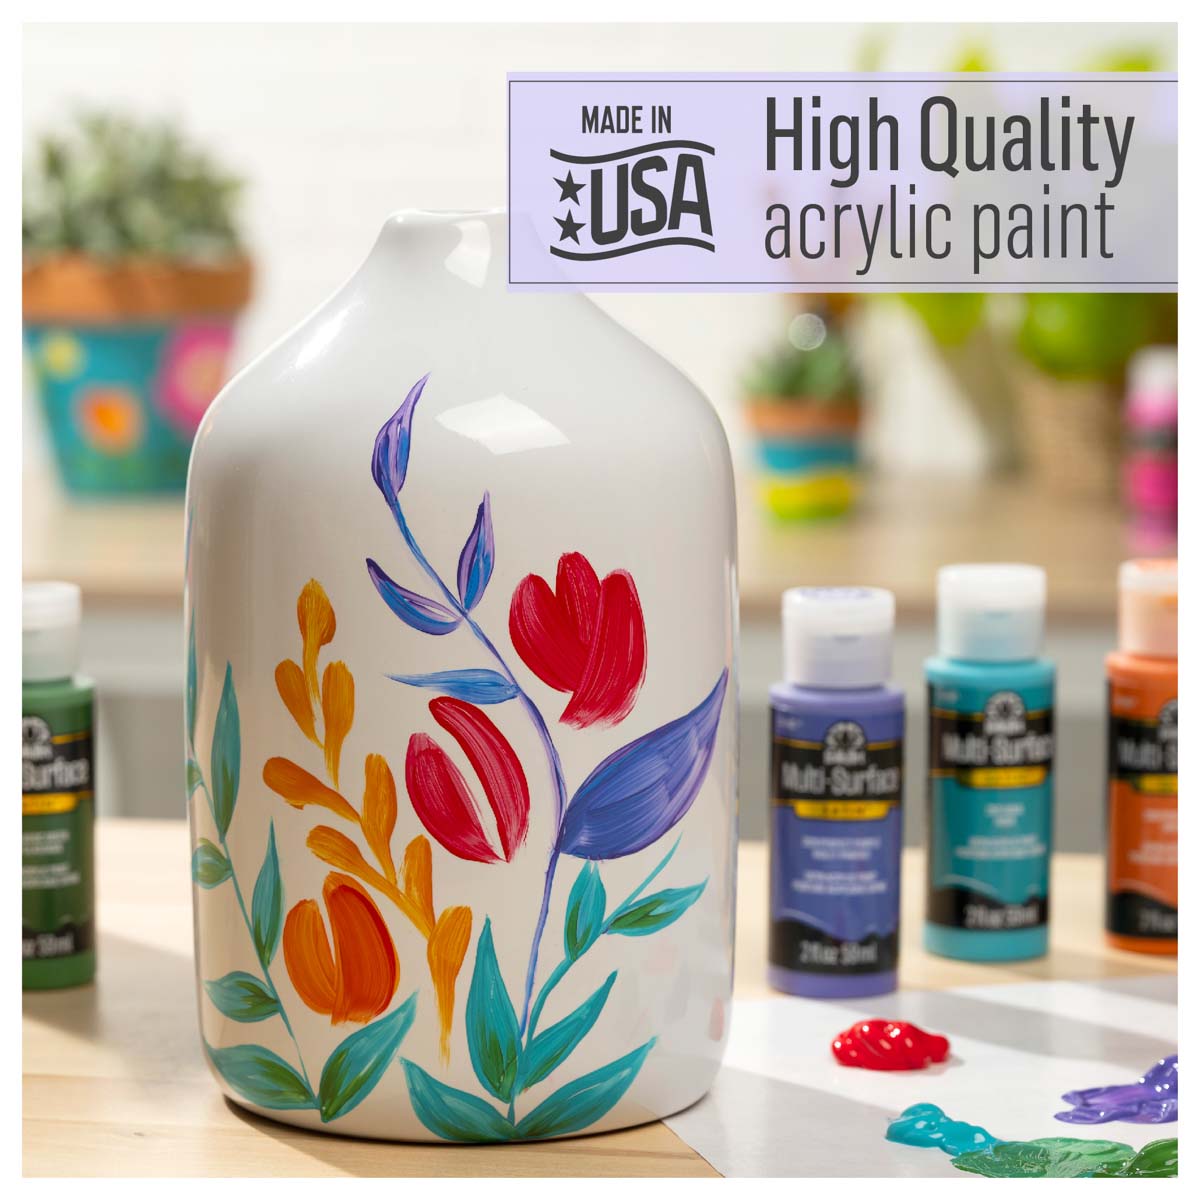 FolkArt ® Multi-Surface Satin Acrylic Paints - Bumblebee, 2 oz. - 99236